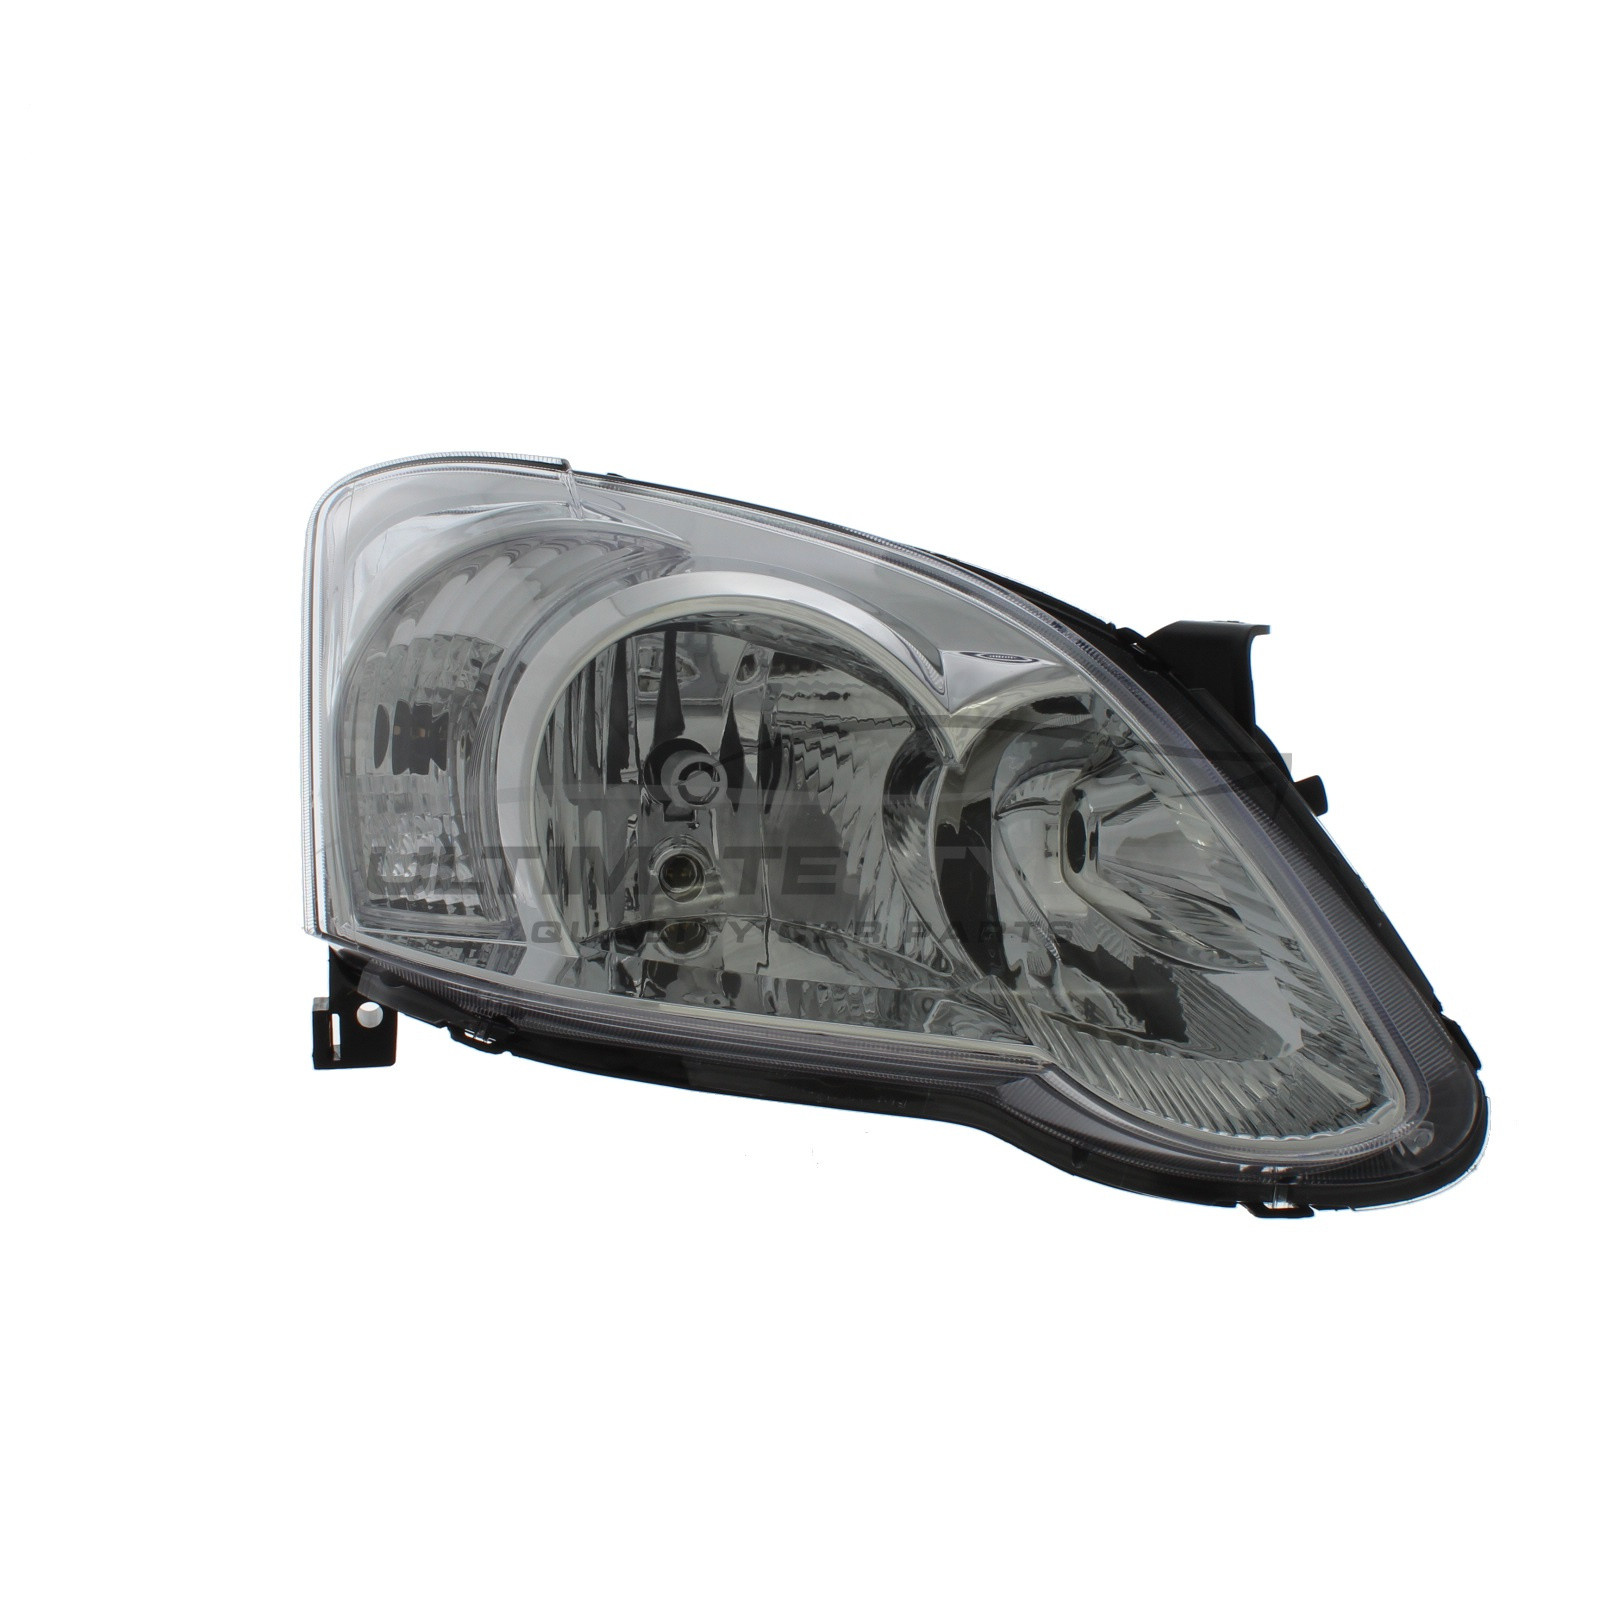 Headlight / Headlamp for Toyota Corolla